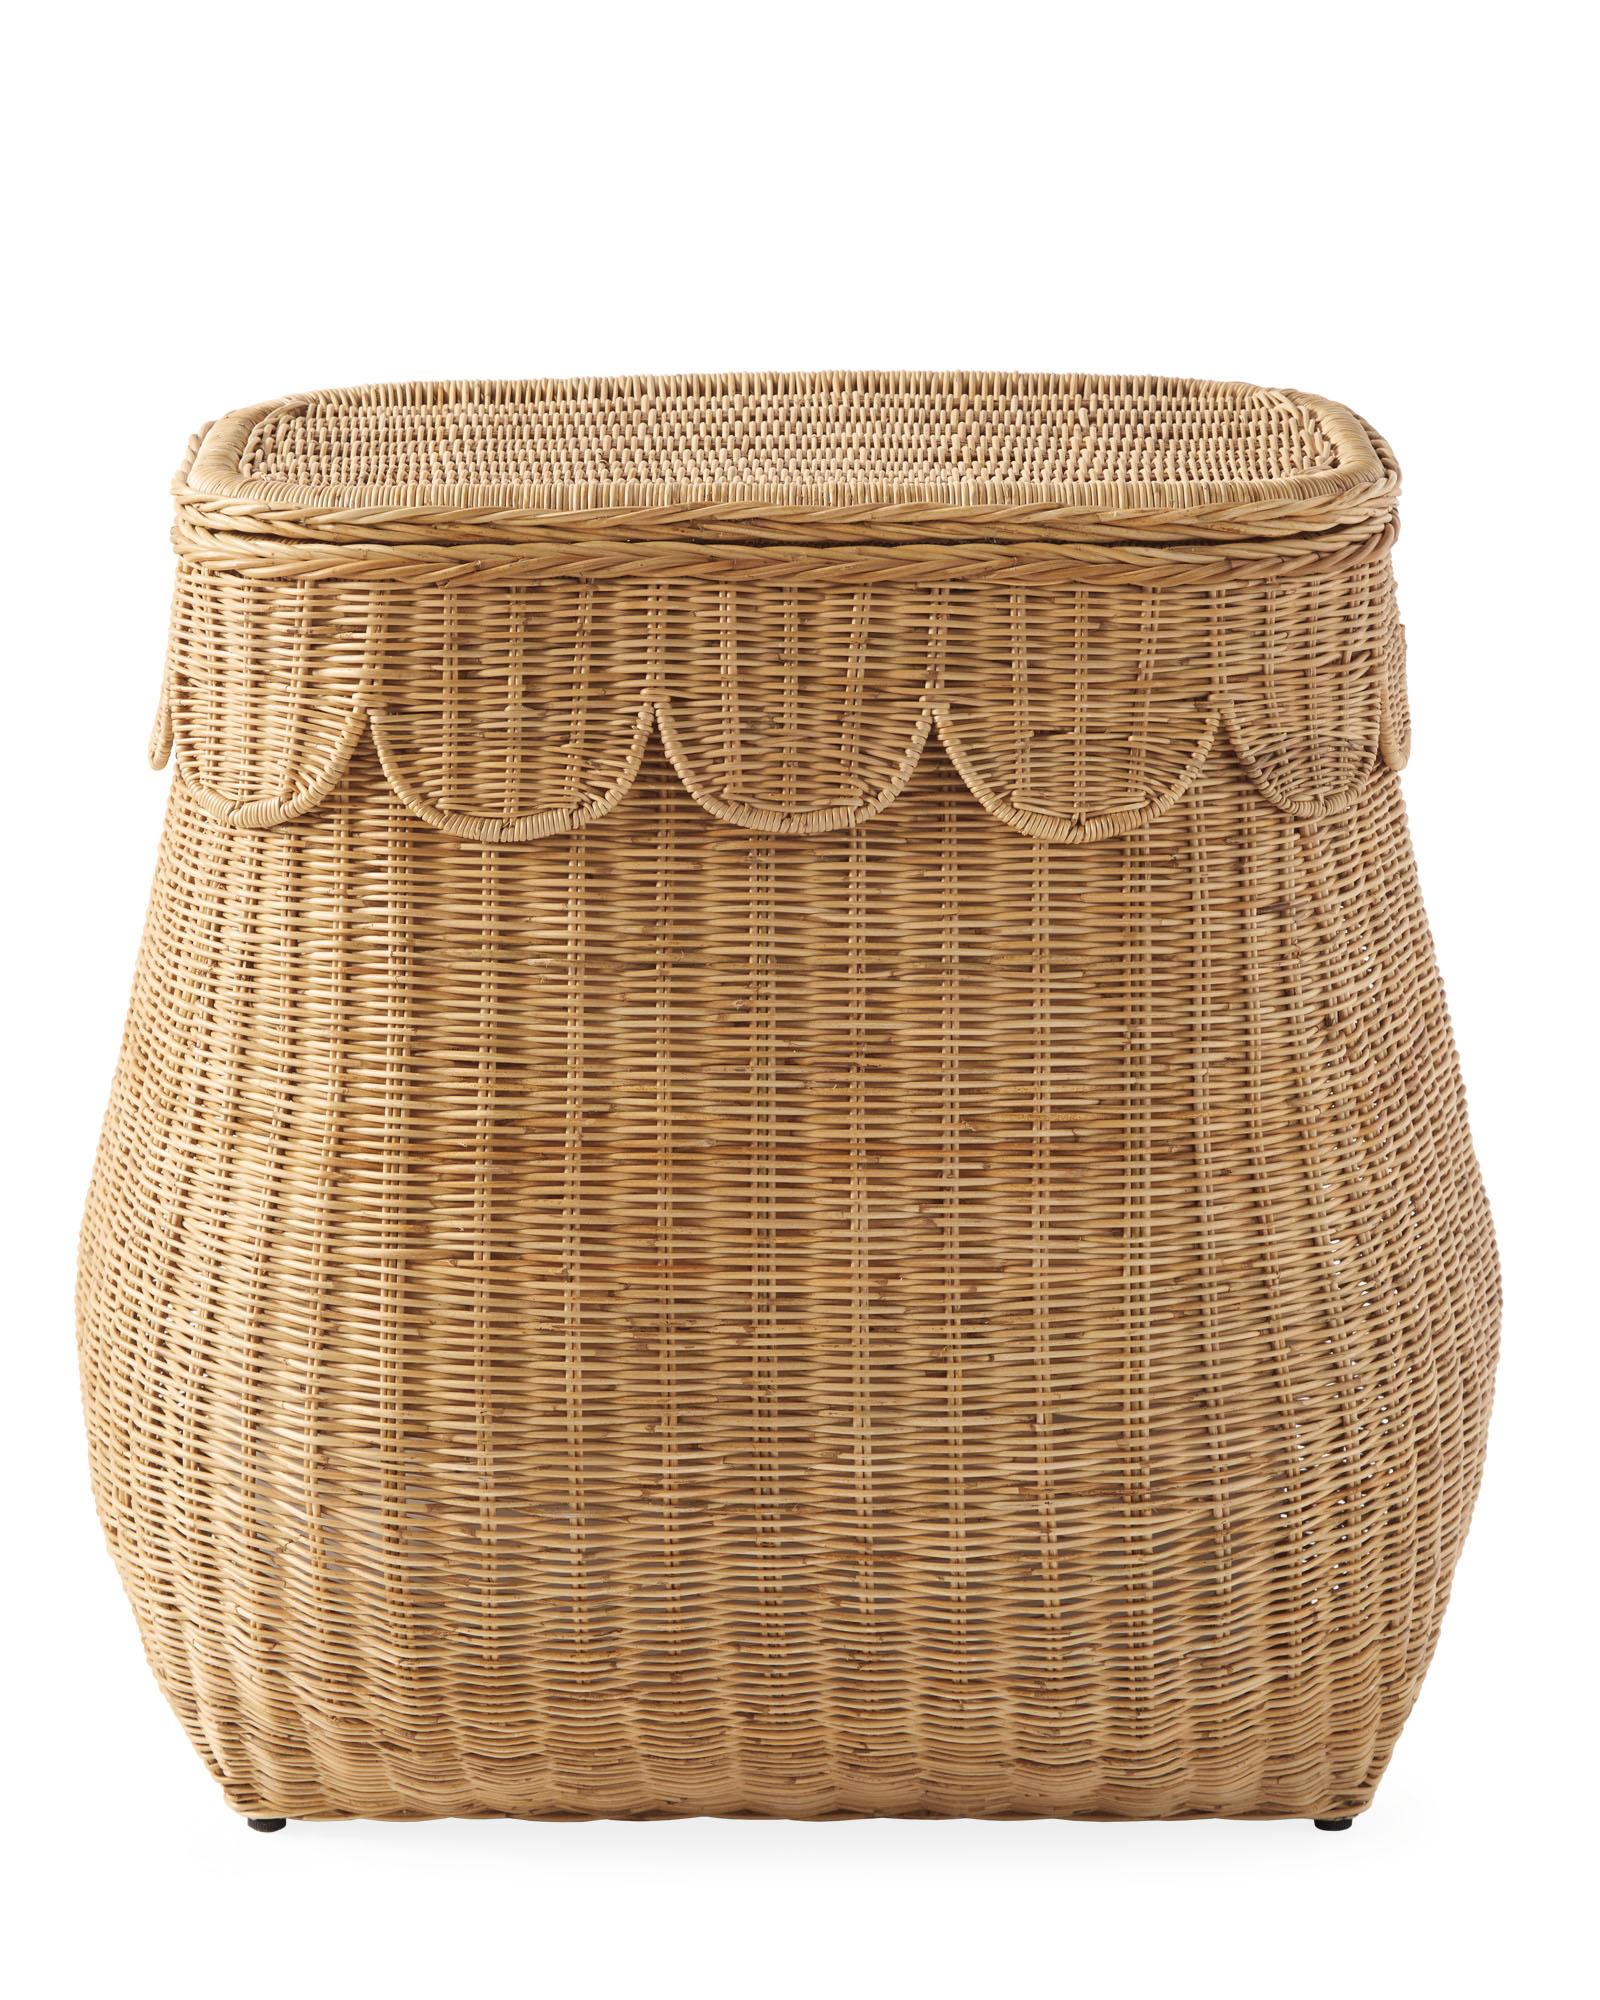 Small Plastic Basket Weave Tote, Blush, 10 x 7 inches